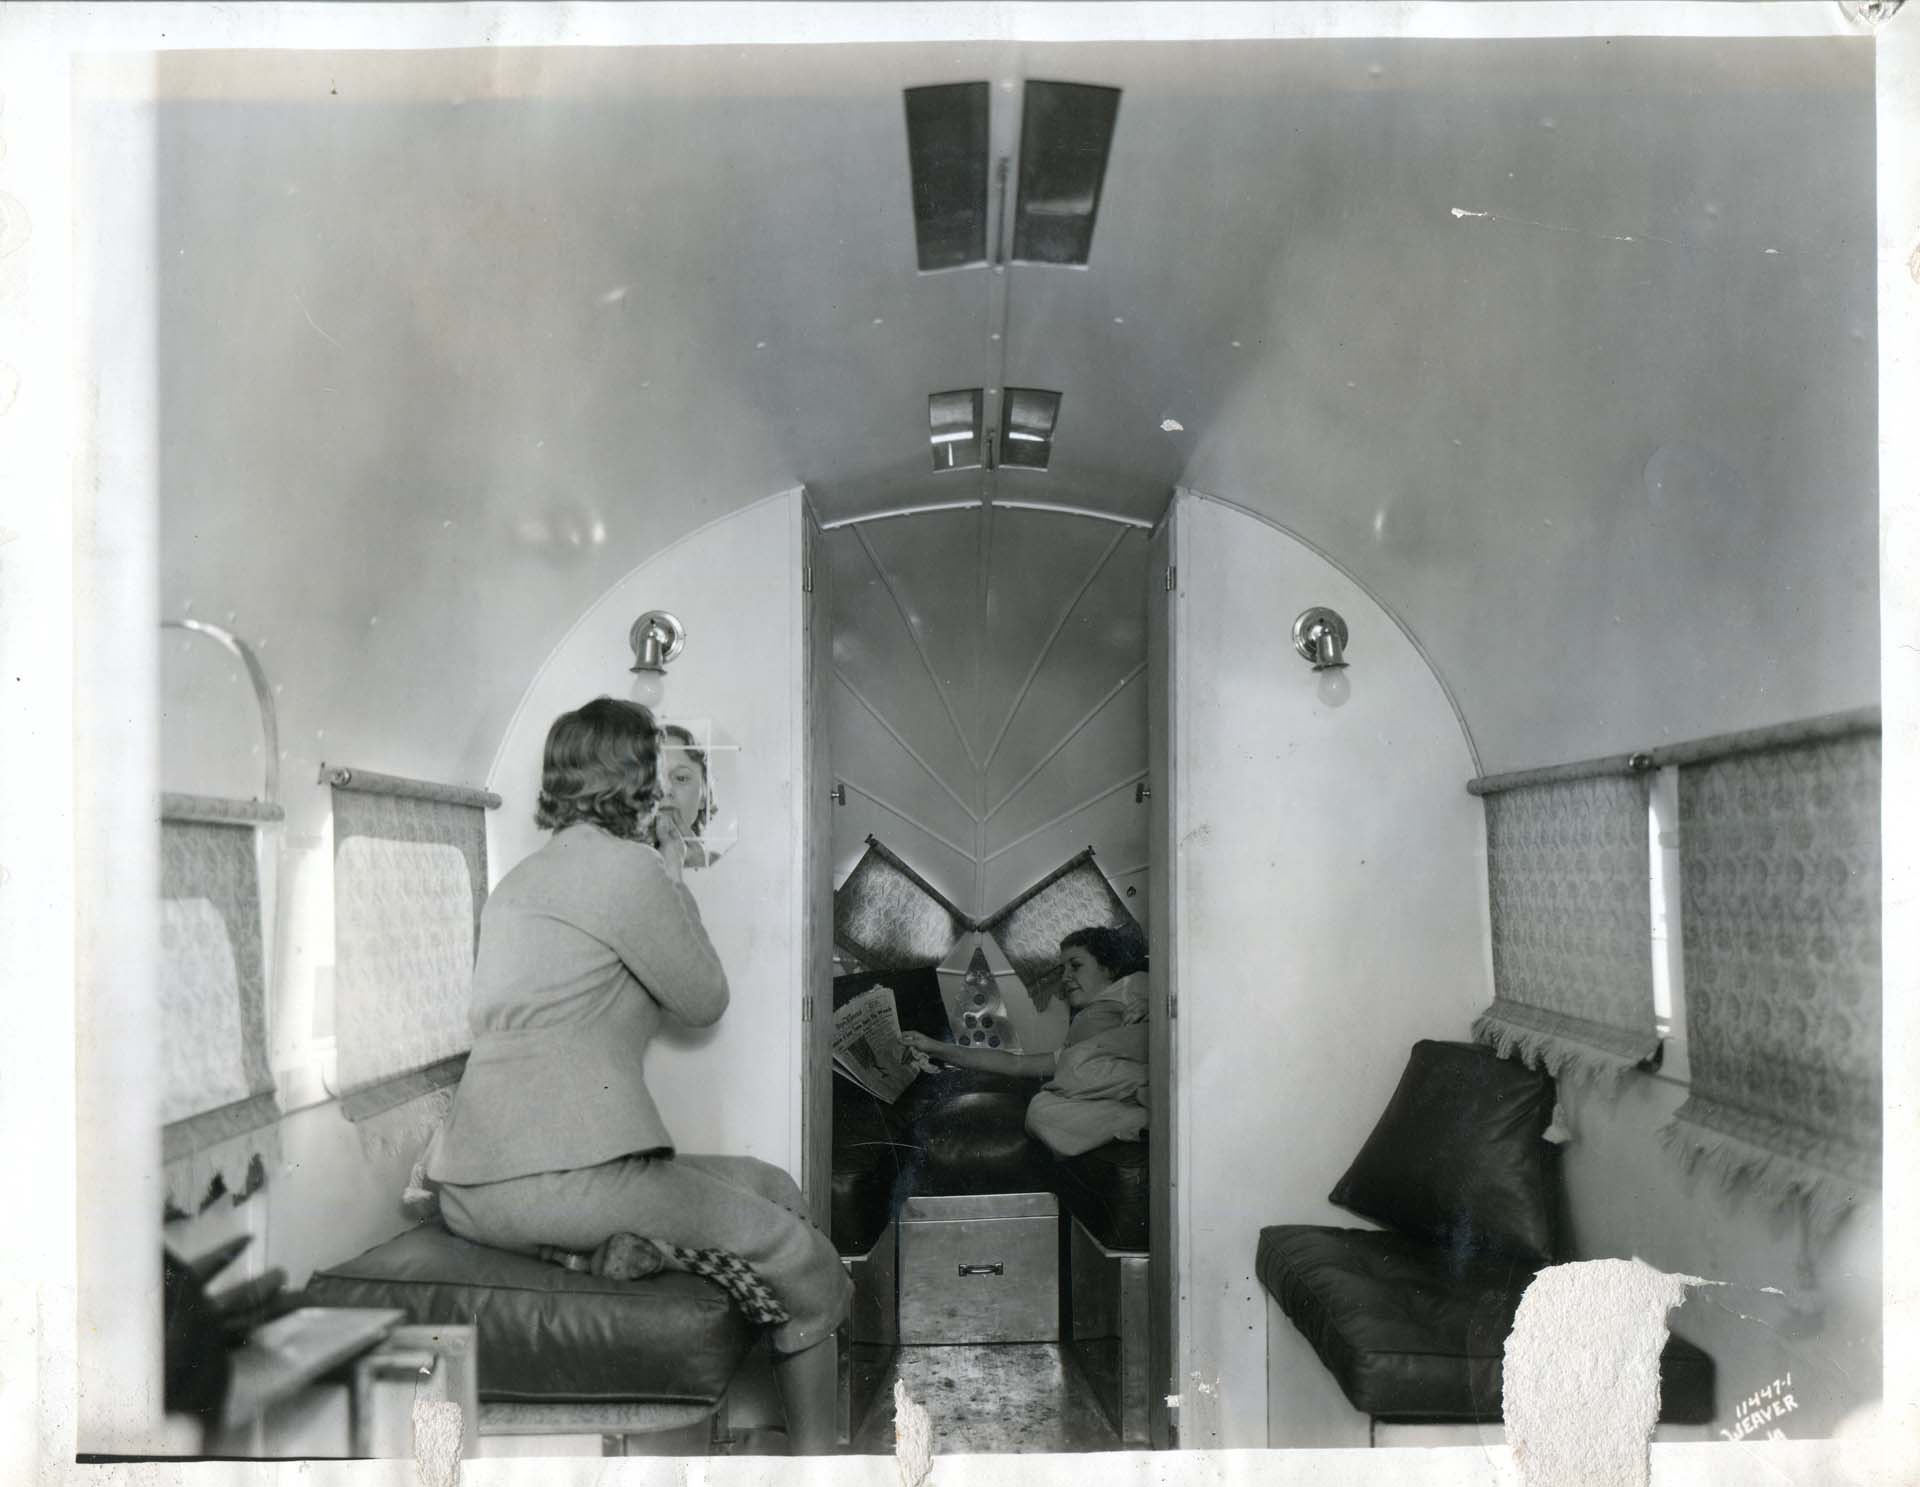 Airstream Clipper #1 interior - circa 1938